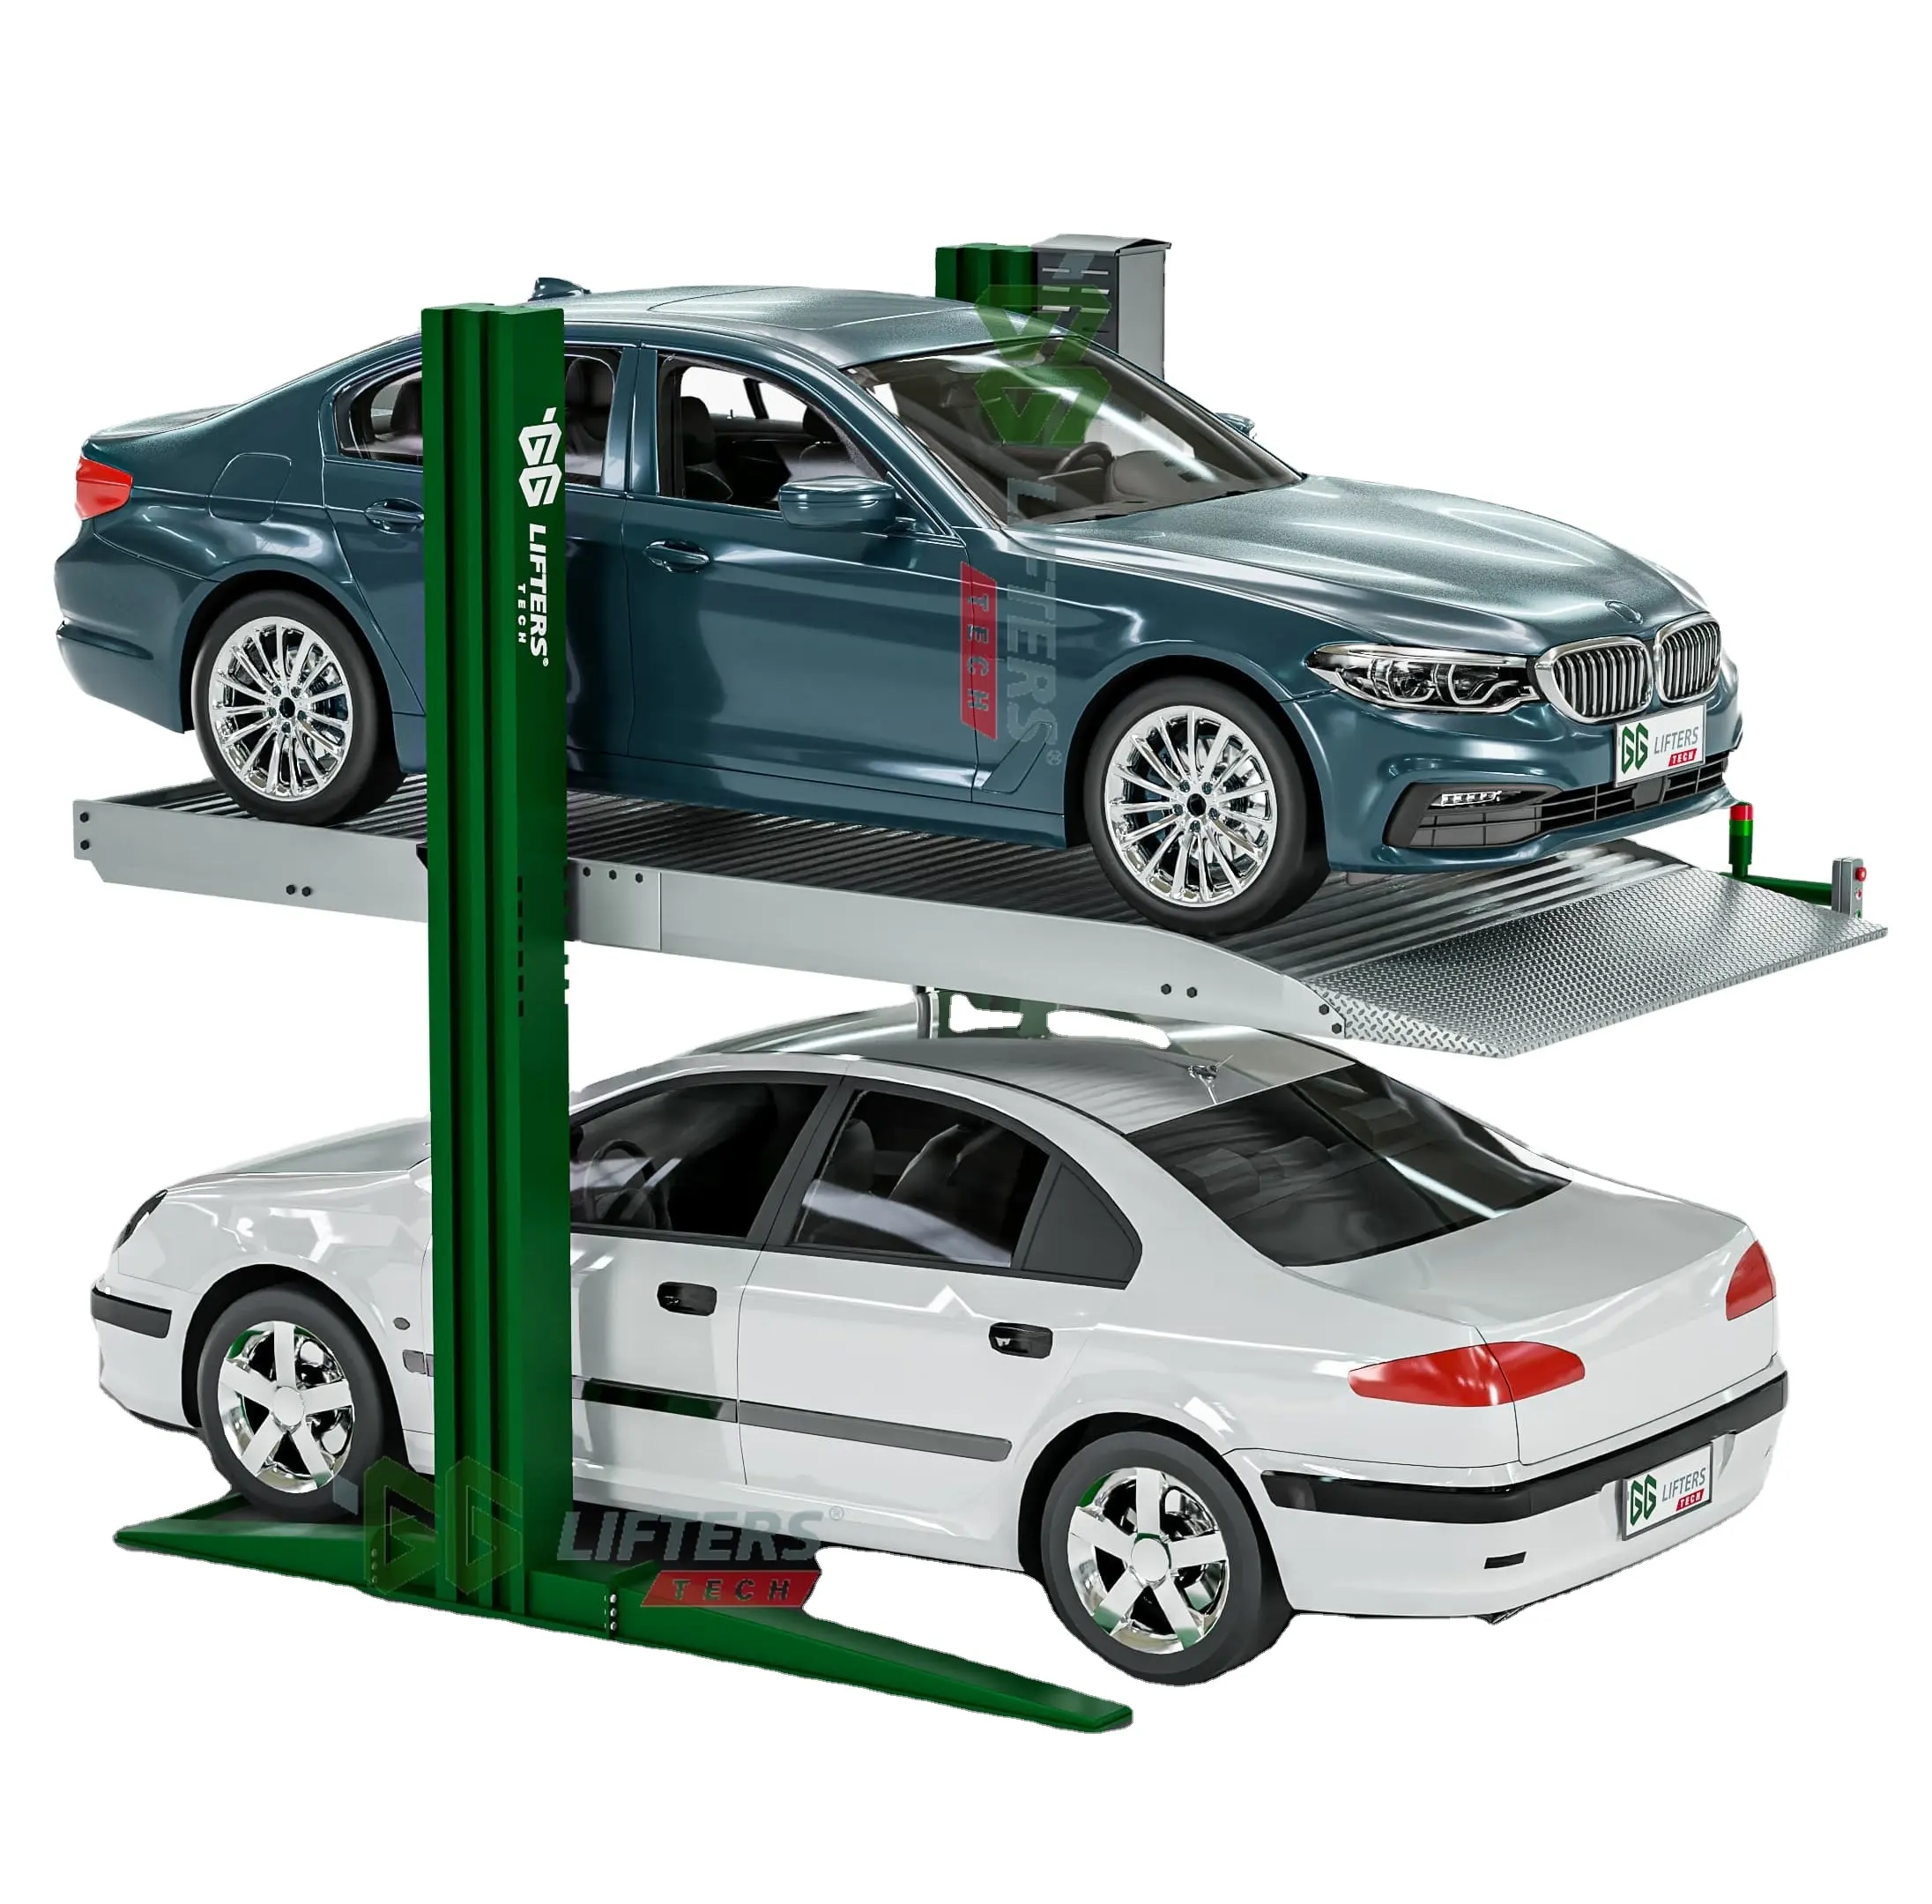 प्रतिस्पर्धी मूल्य निर्धारण पर सीई प्रमाणित डबल सिलेंडर हाइड्रोलिक कार पार्किंग लिफ्ट दो-पोस्ट डिजाइन